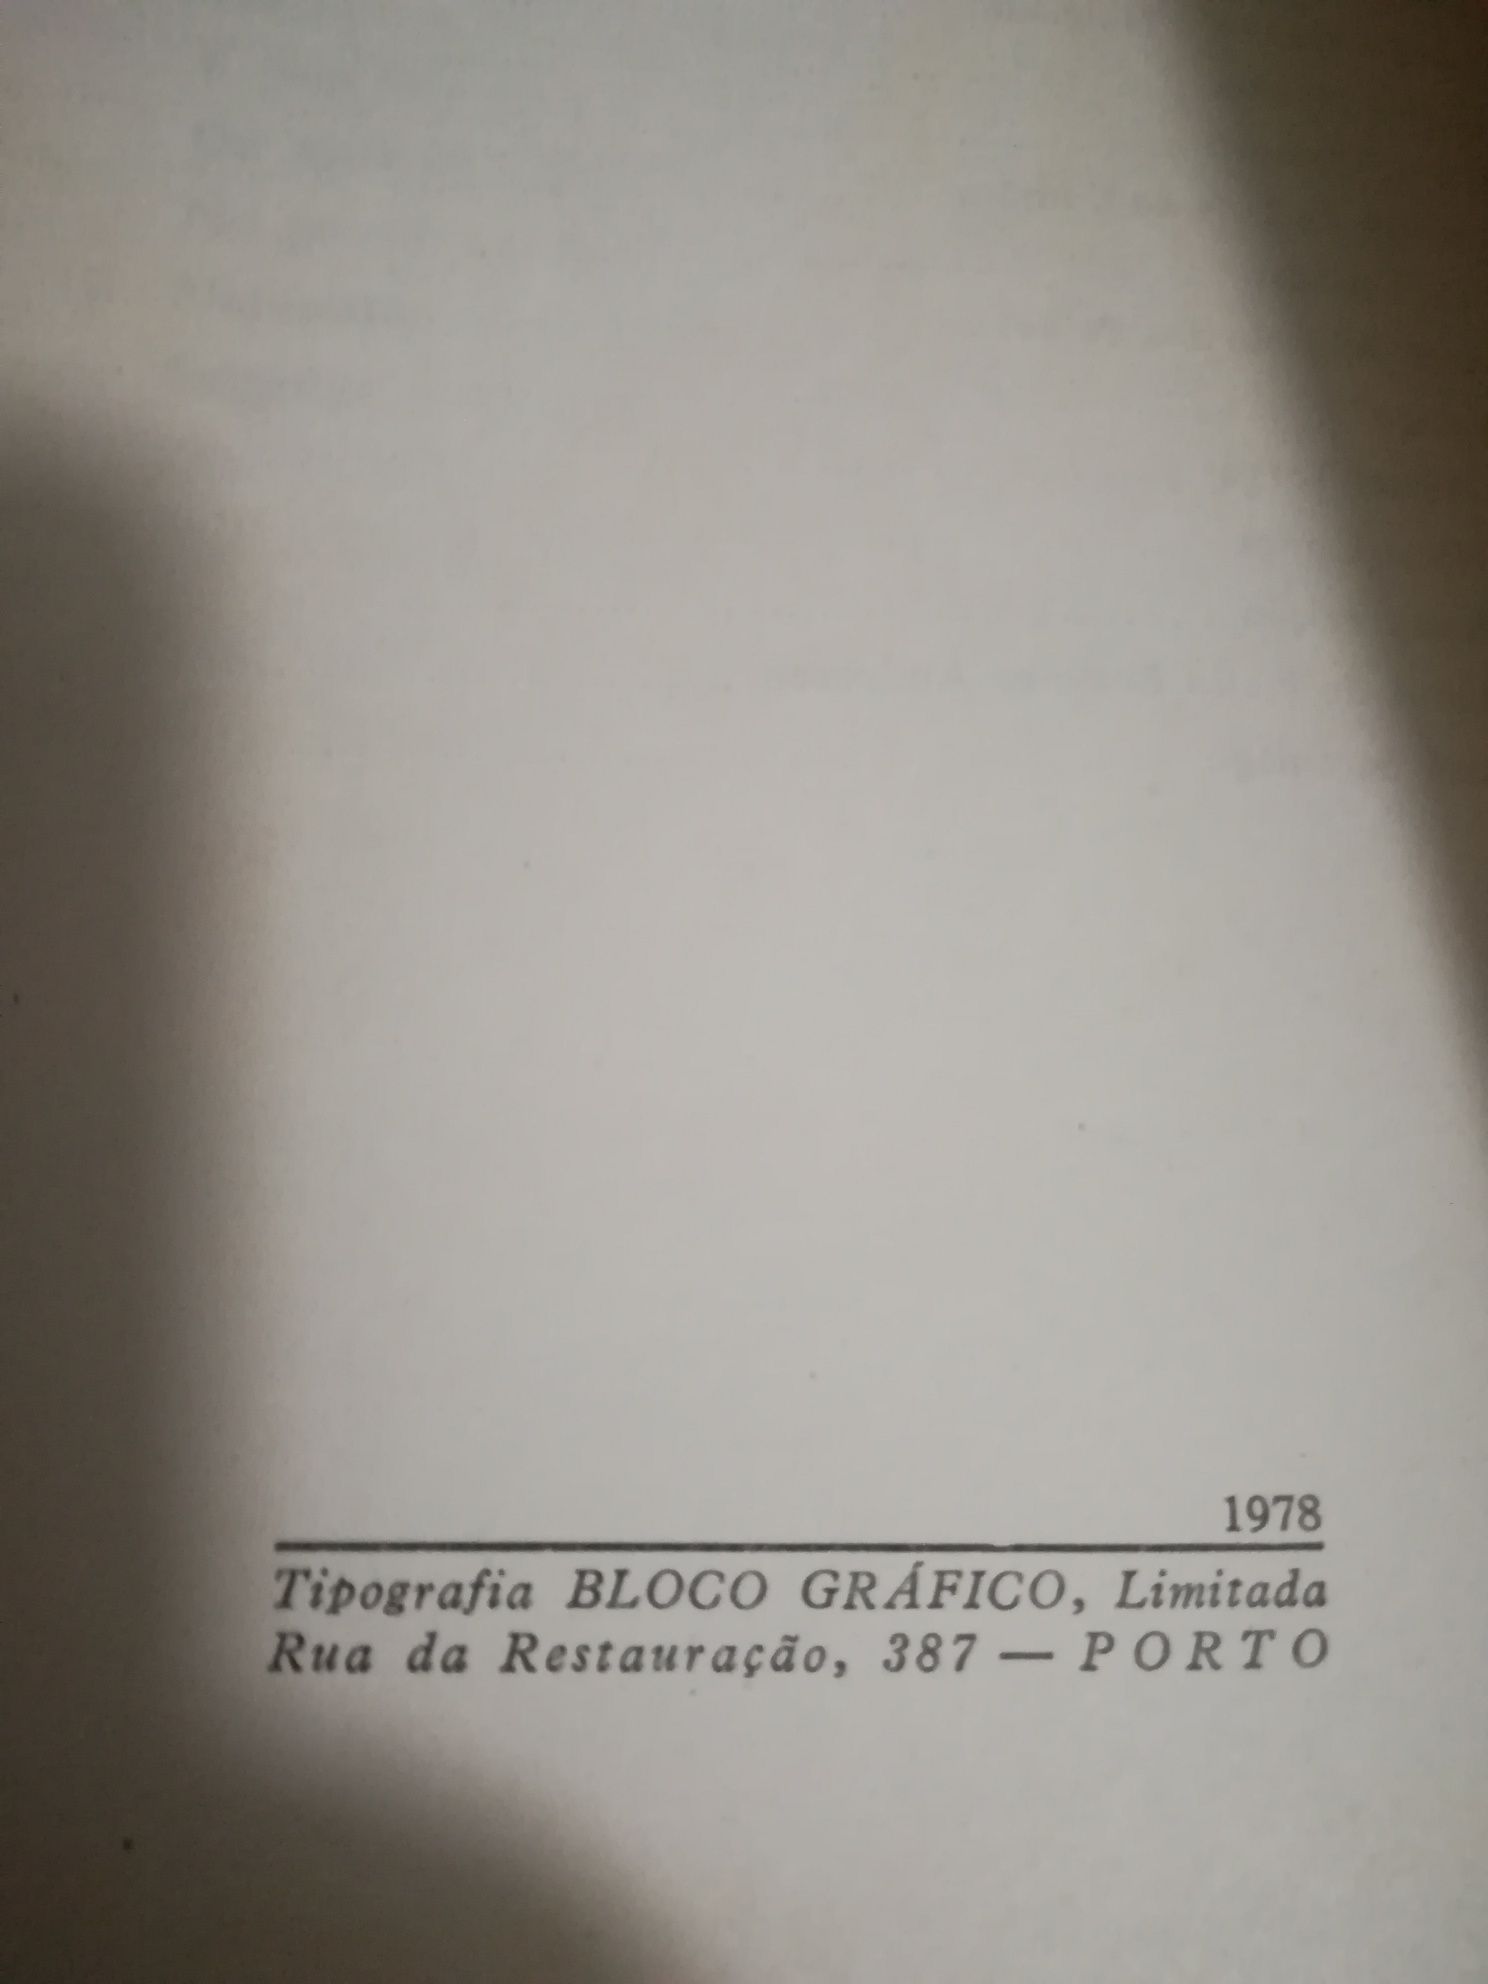 Pequena Antologia de Autores Portugueses (1978)